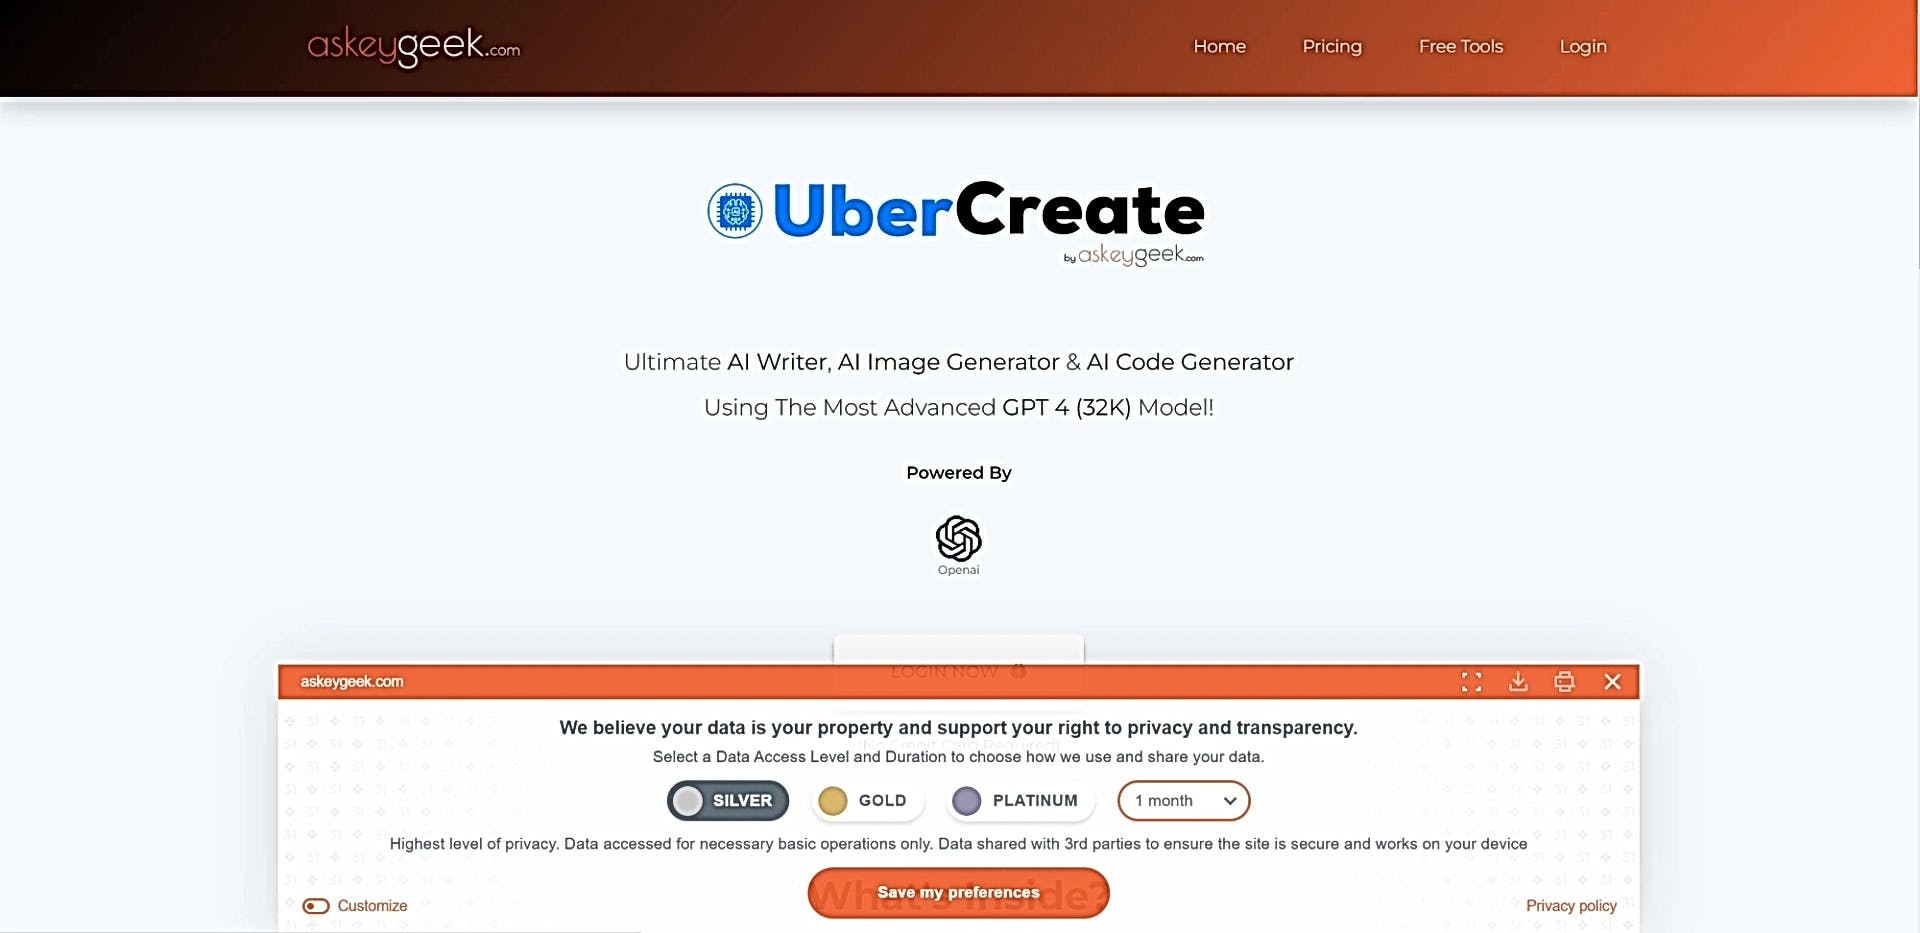 UberCreate featured